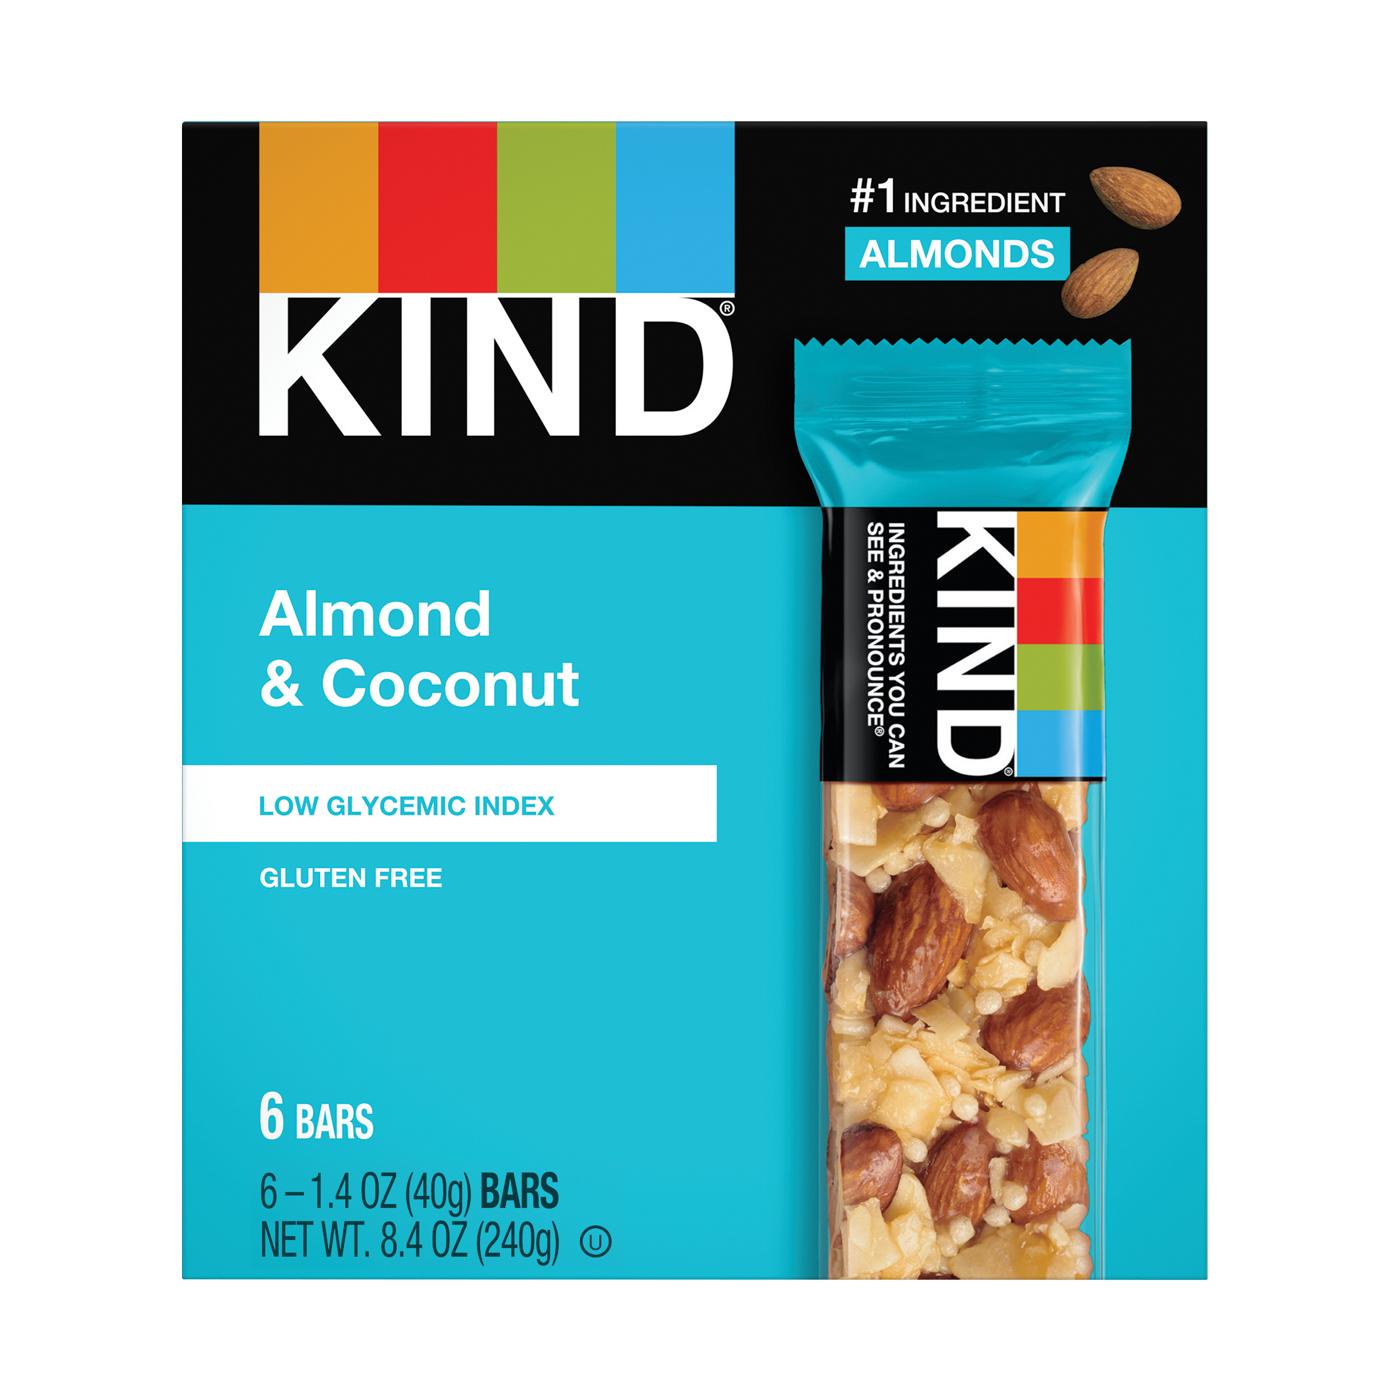 Kind Almond & Coconut Bars; image 2 of 2